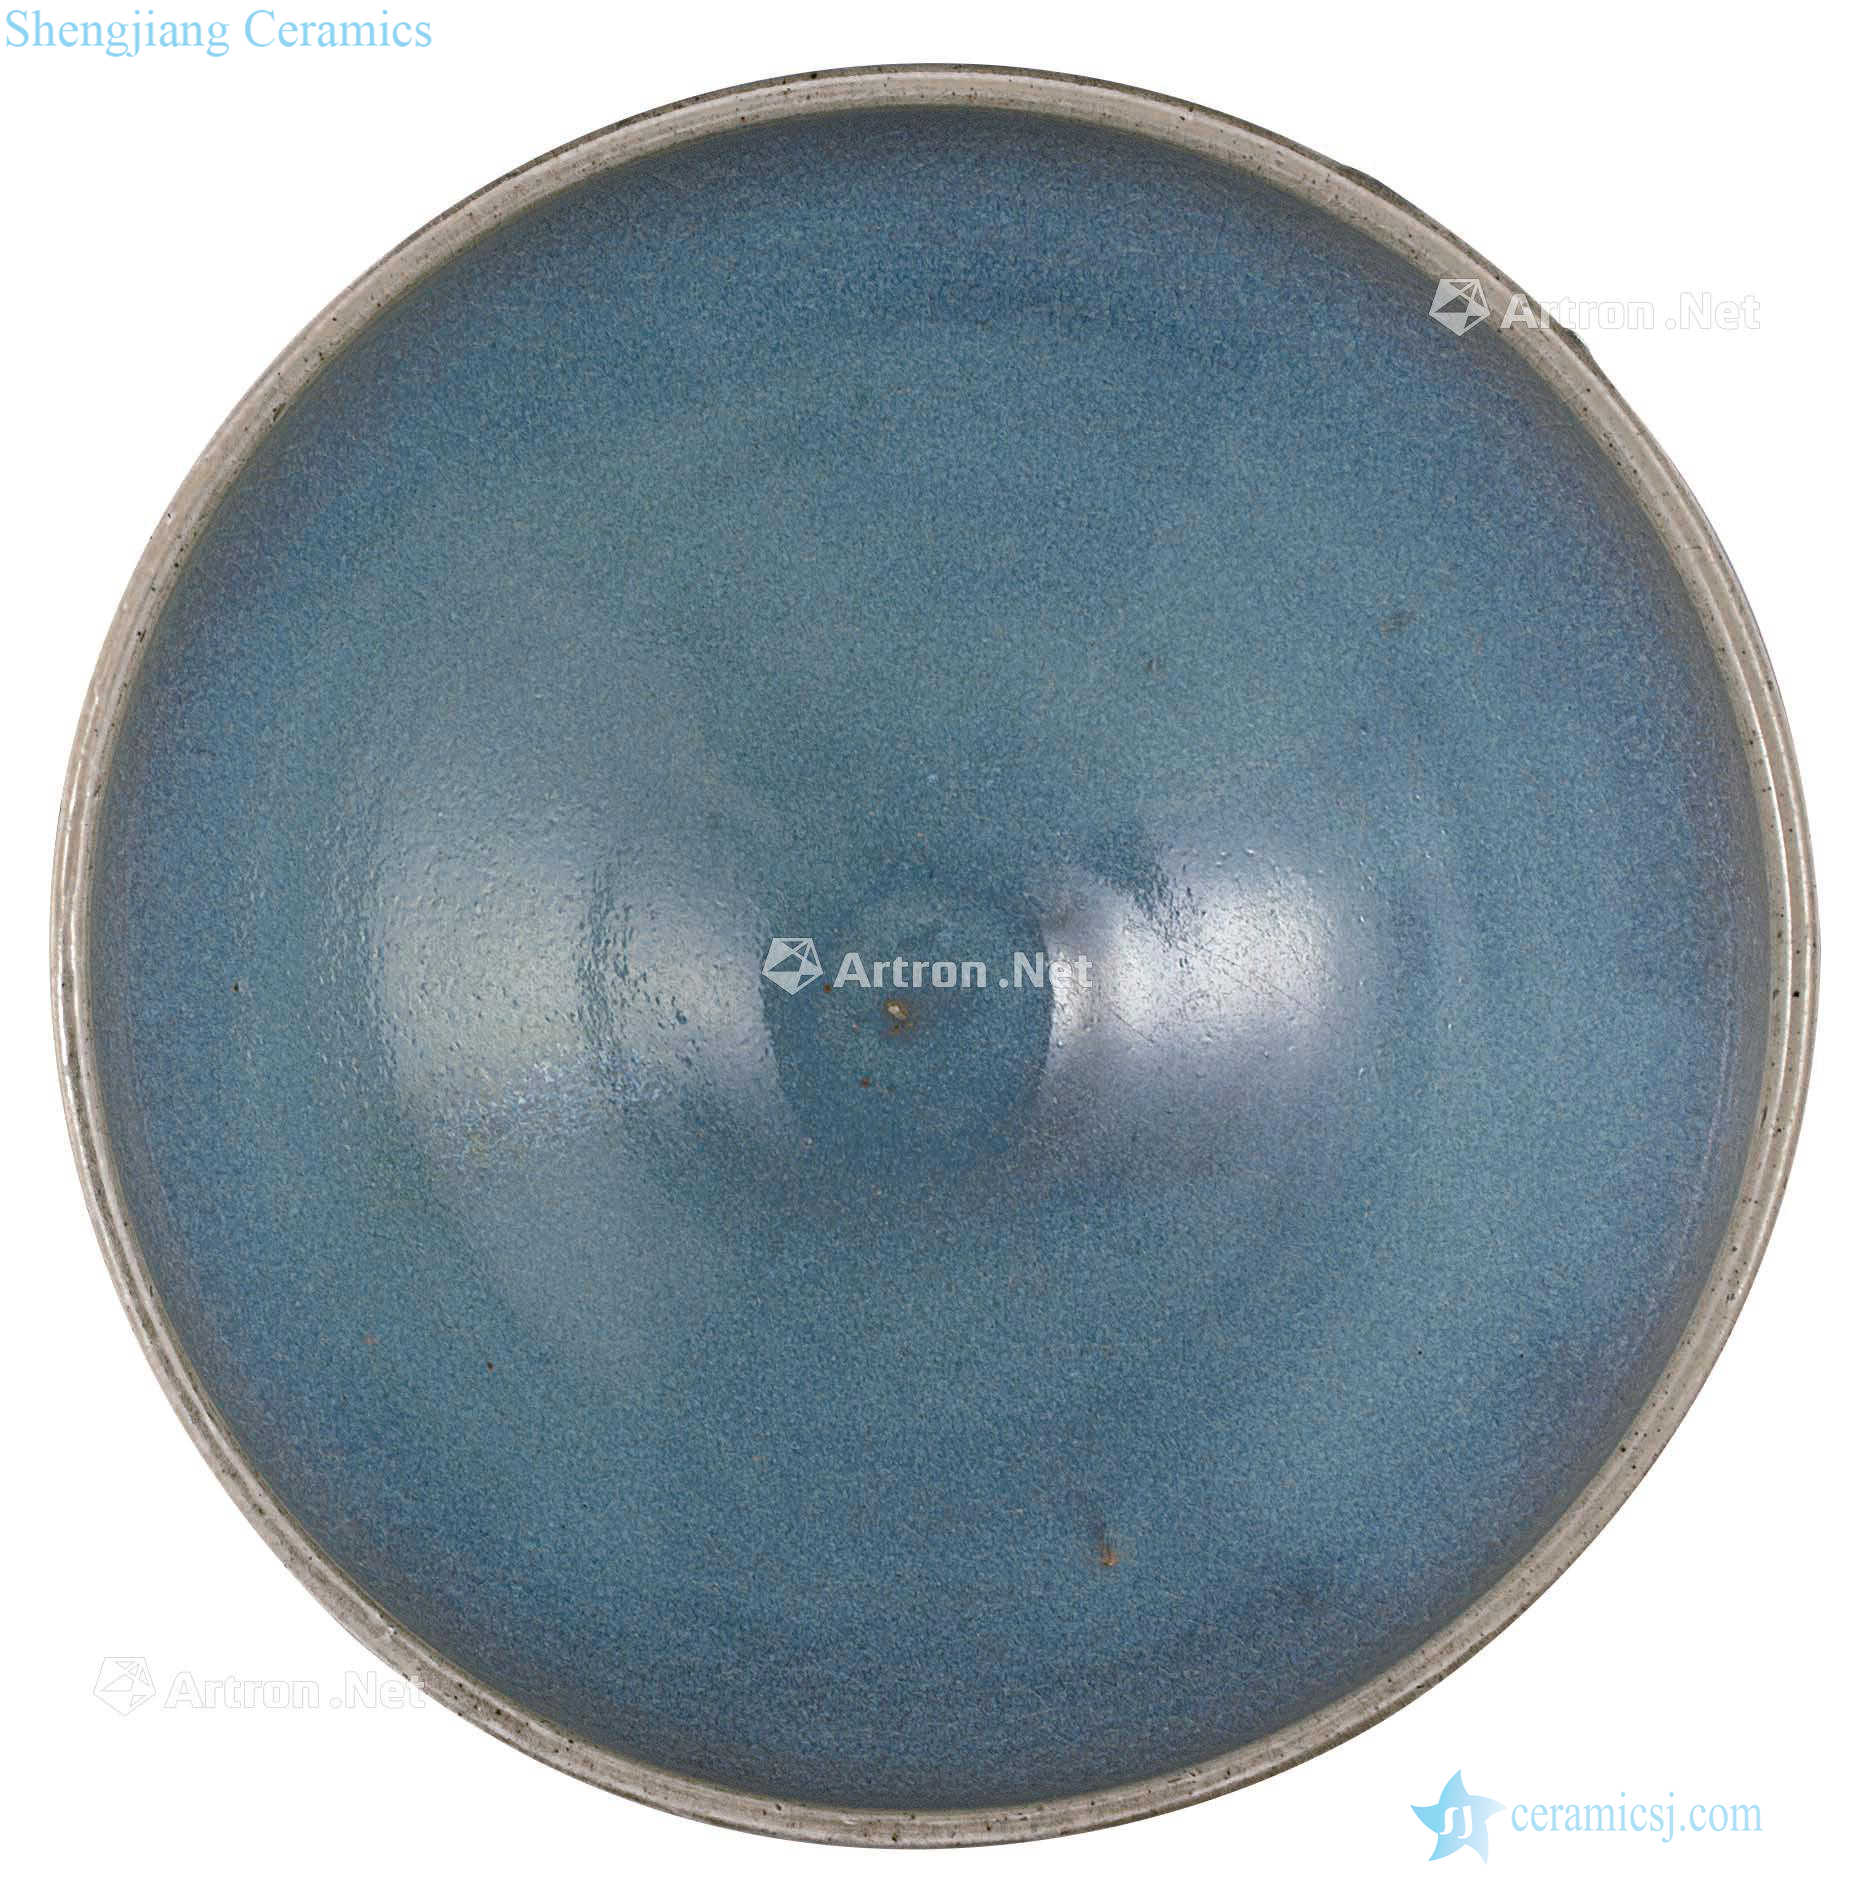 The yuan dynasty pa The azure glaze bowls